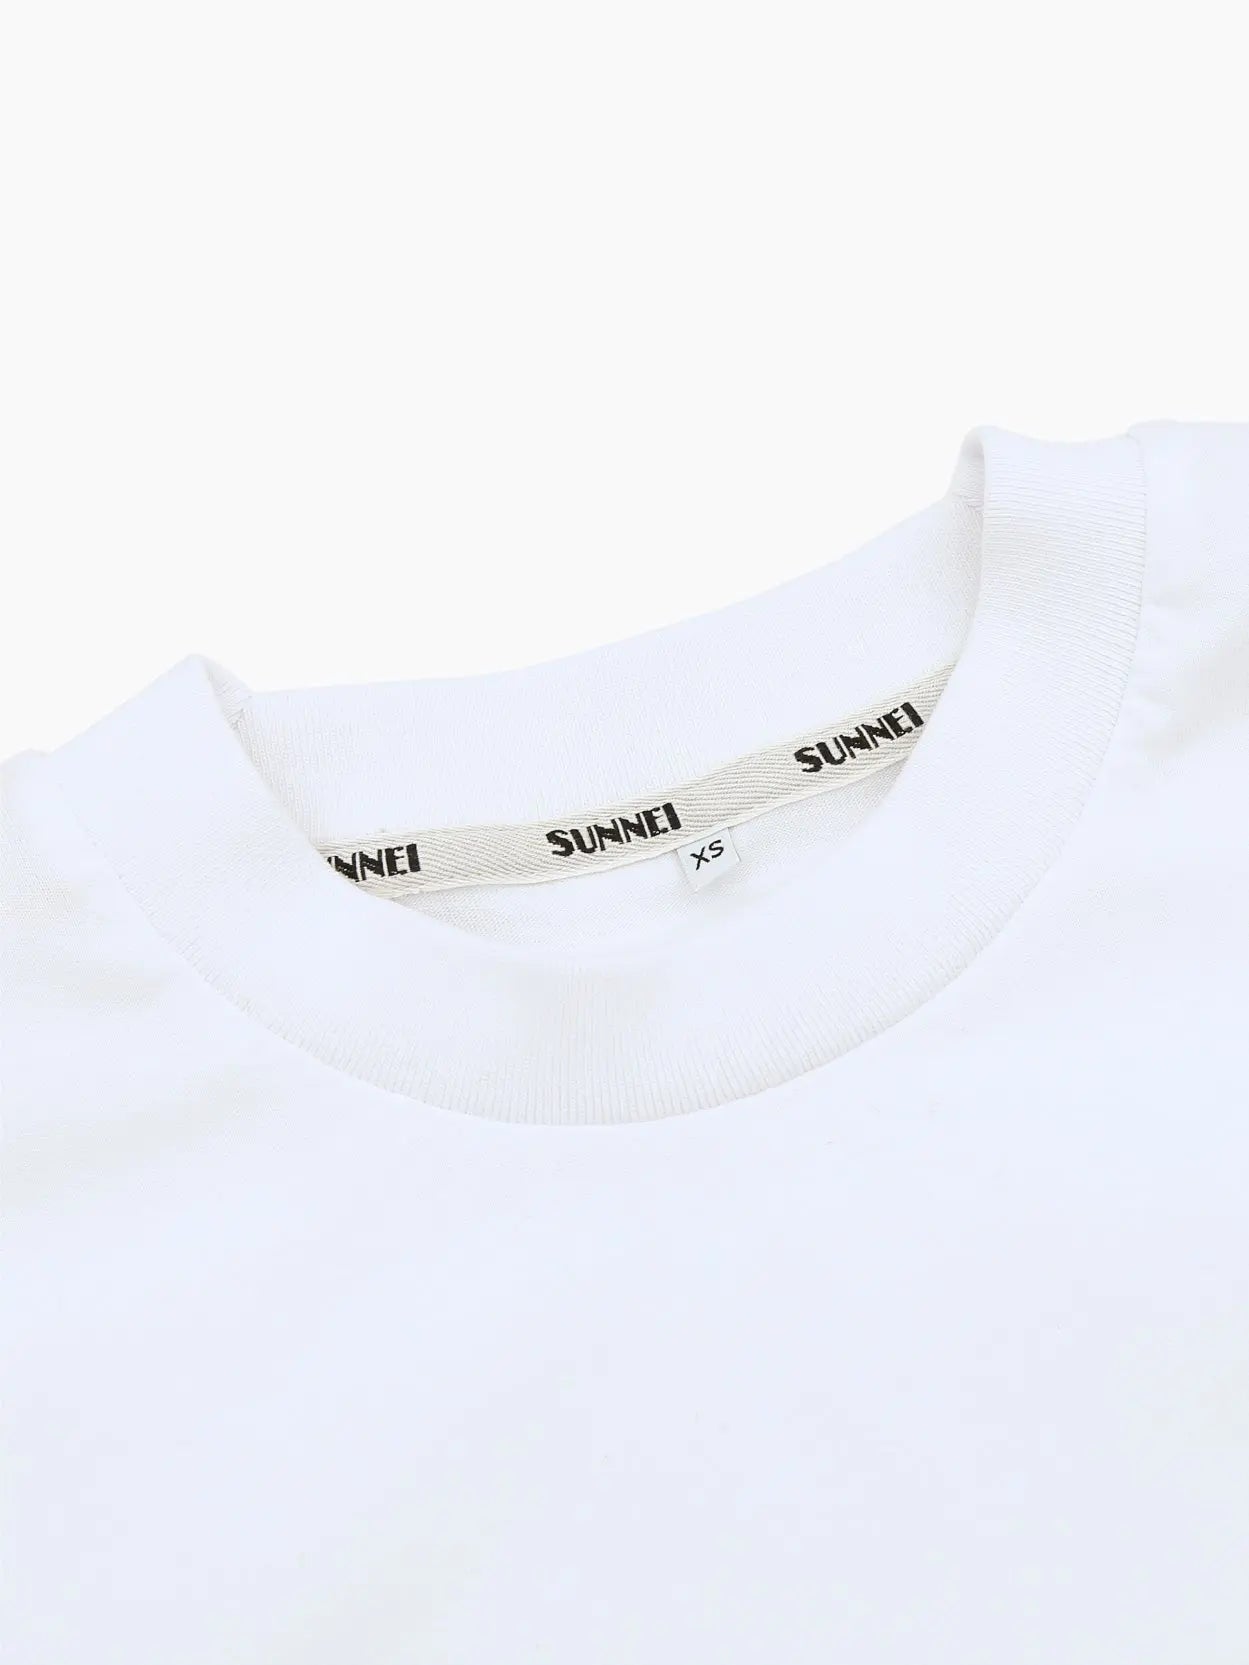 J'Adorerei Sunnei T-Shirt Re-Edition Sunnei